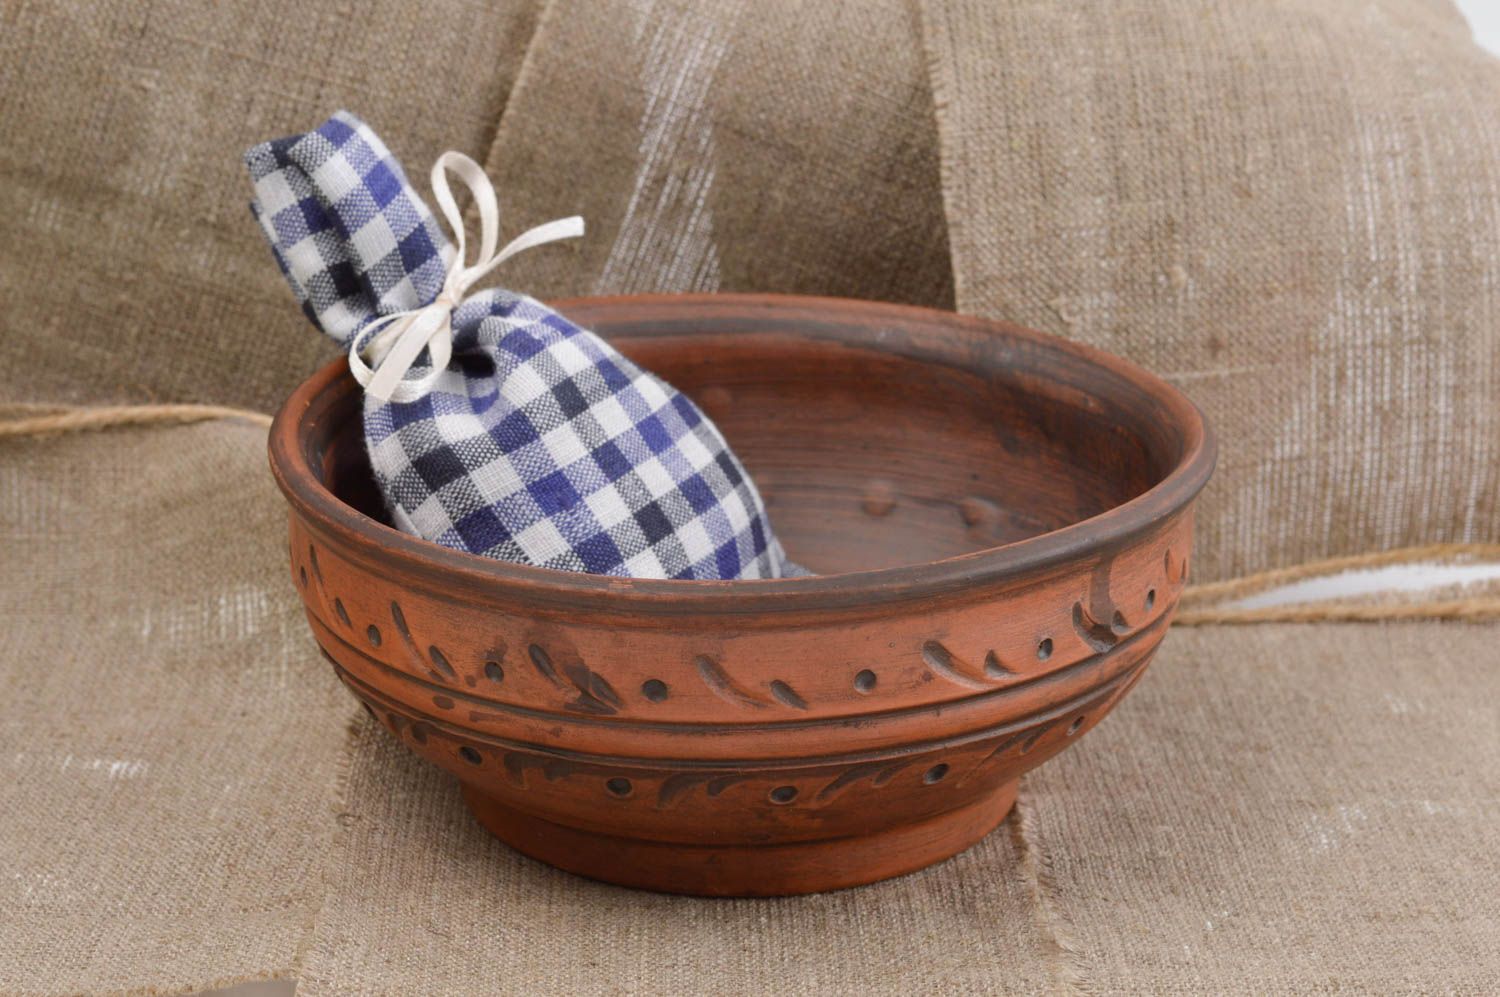 Beautiful handmade ceramic bowl pottery works kitchen supplies home goods photo 1